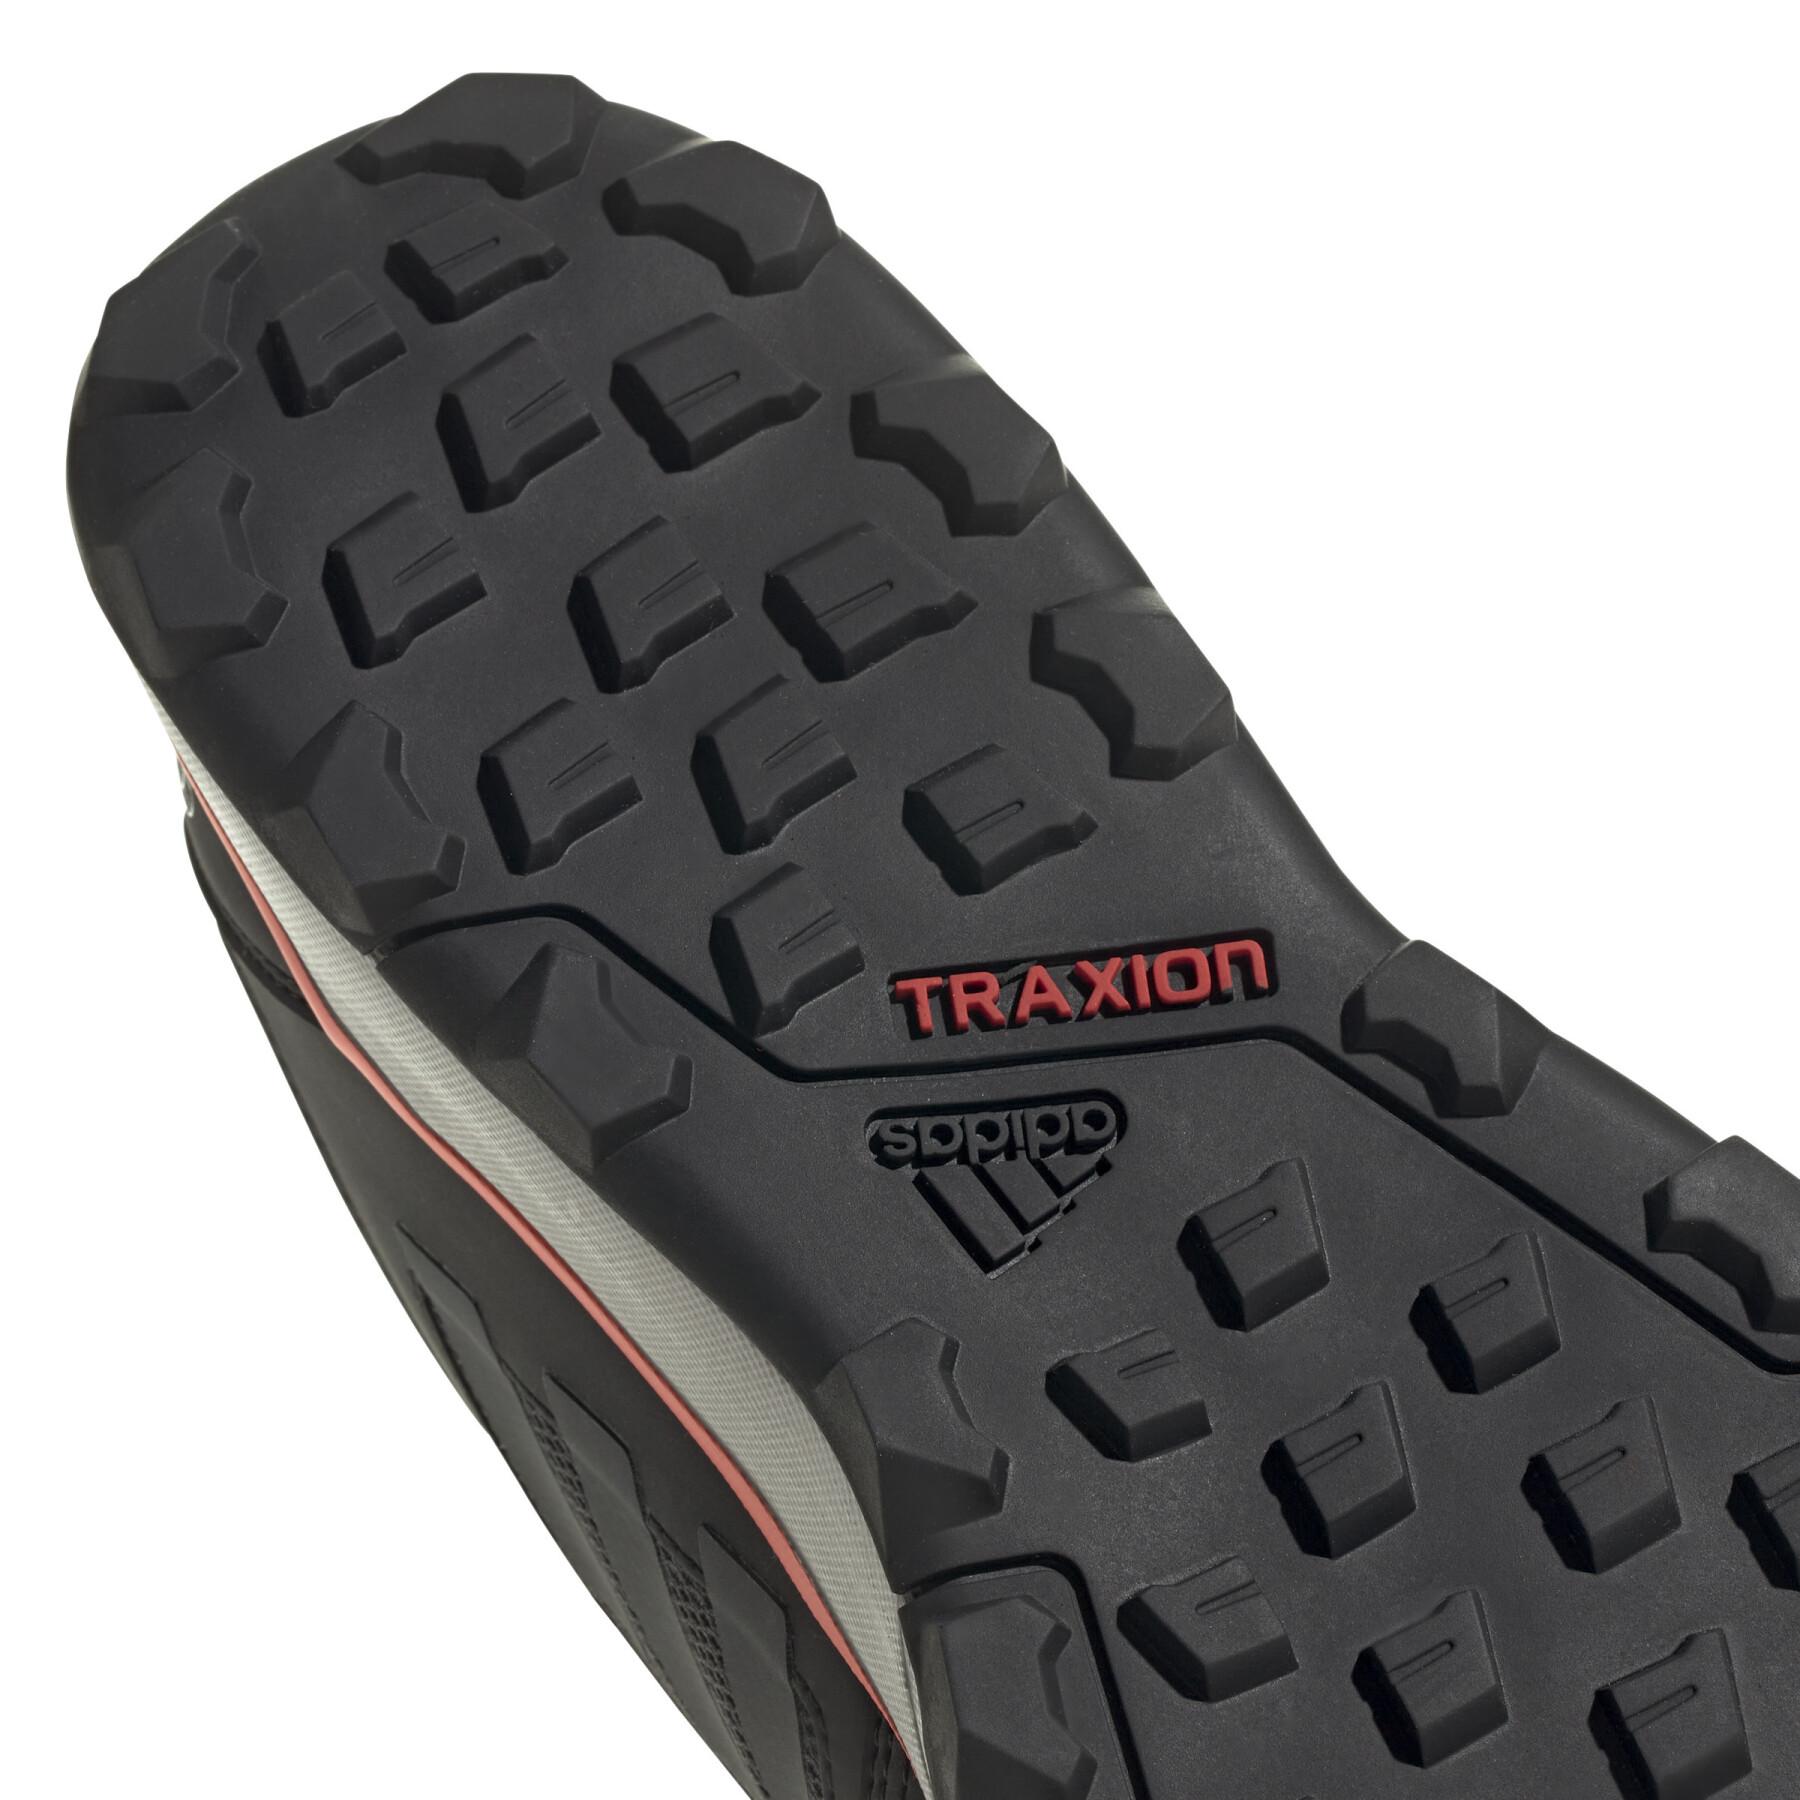 Trail running shoes adidas Tracerocker 2.